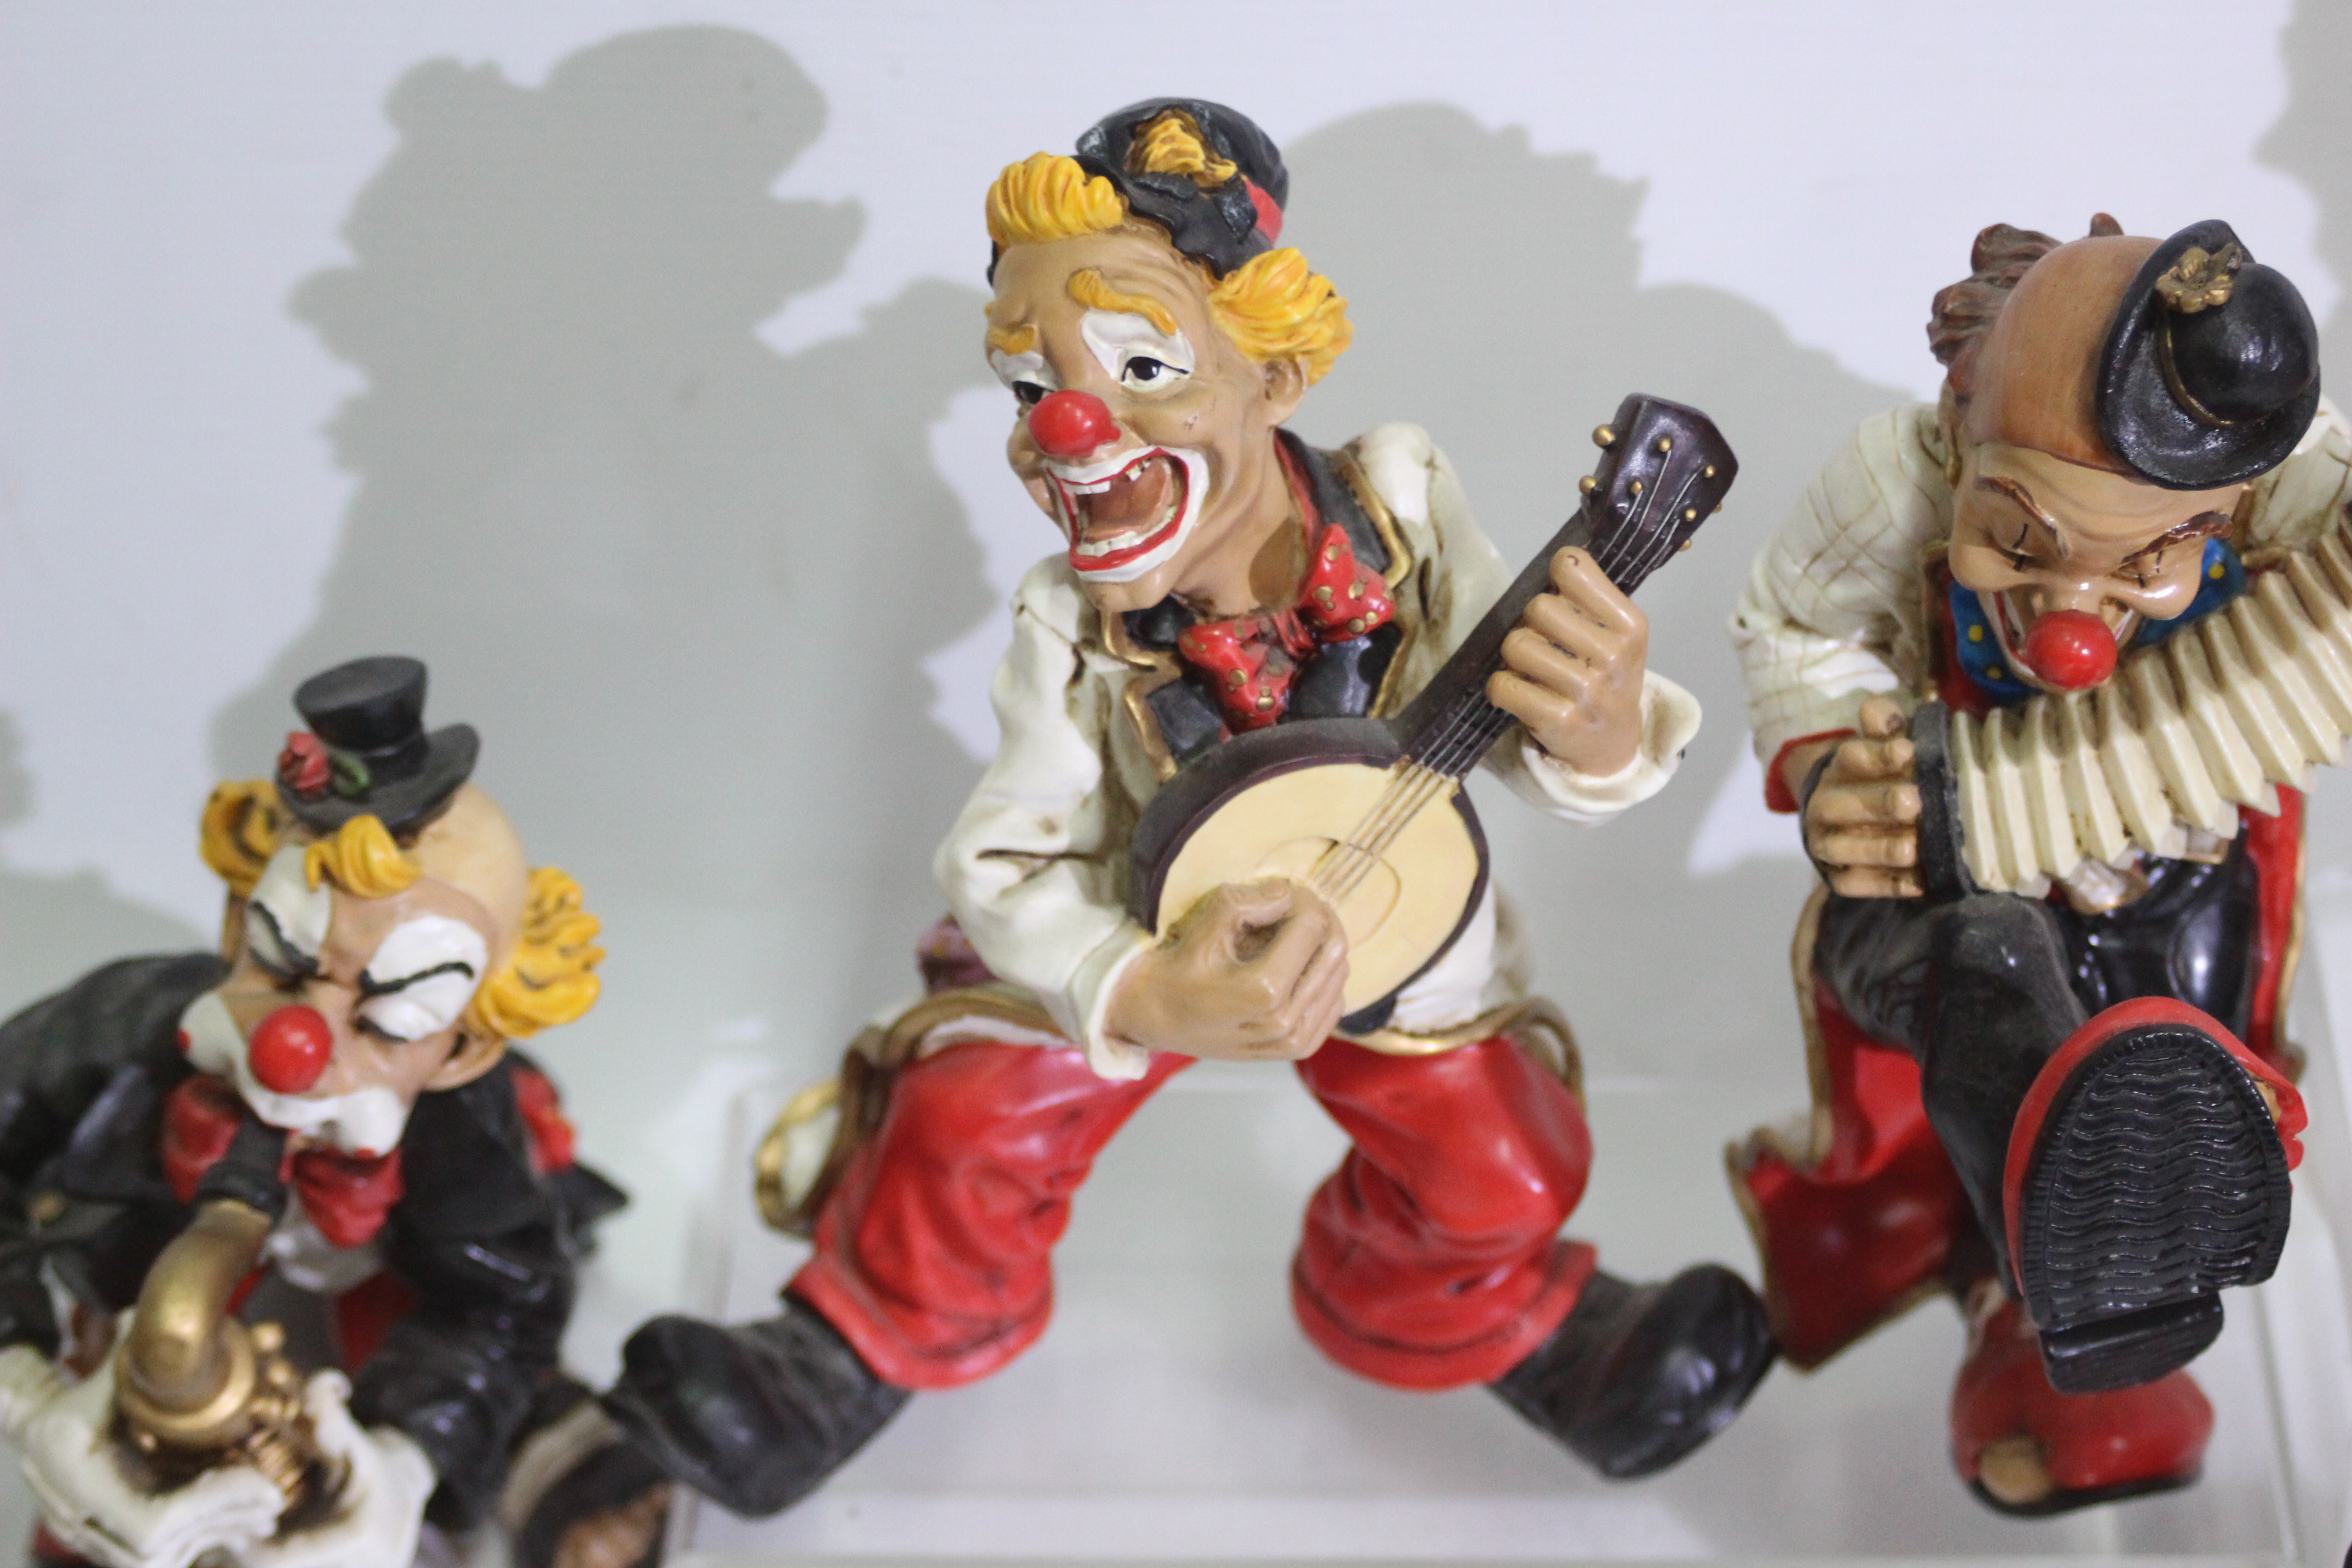 Shudehill - 8 x plastic Shudehill clown figurines - Lot includes clown figurines holding violins, - Image 3 of 4